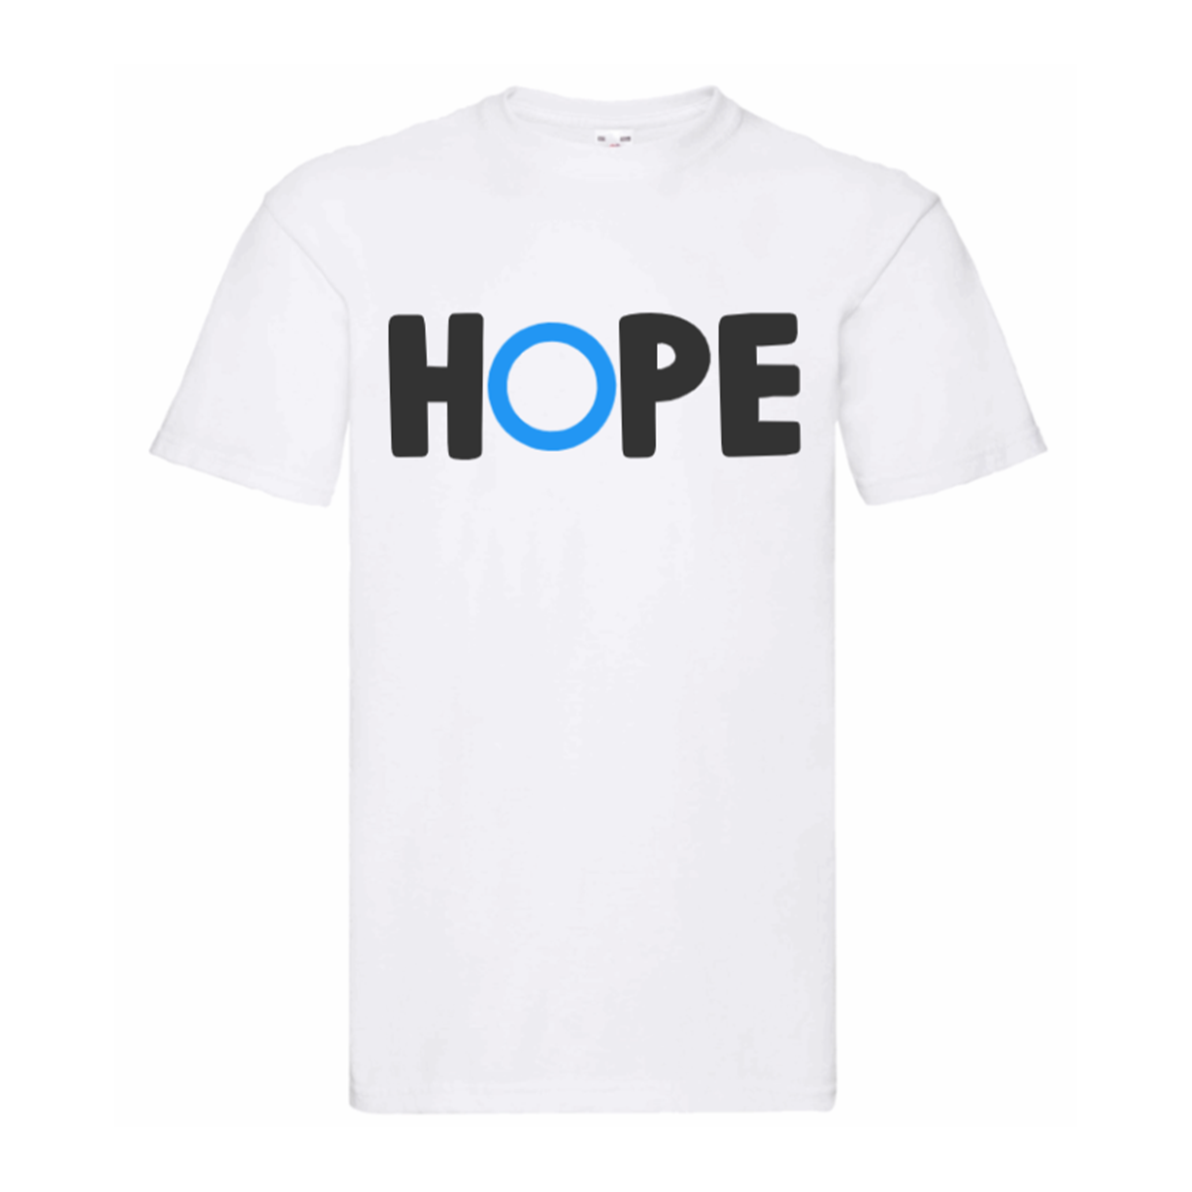 Hope Kids T Shirt